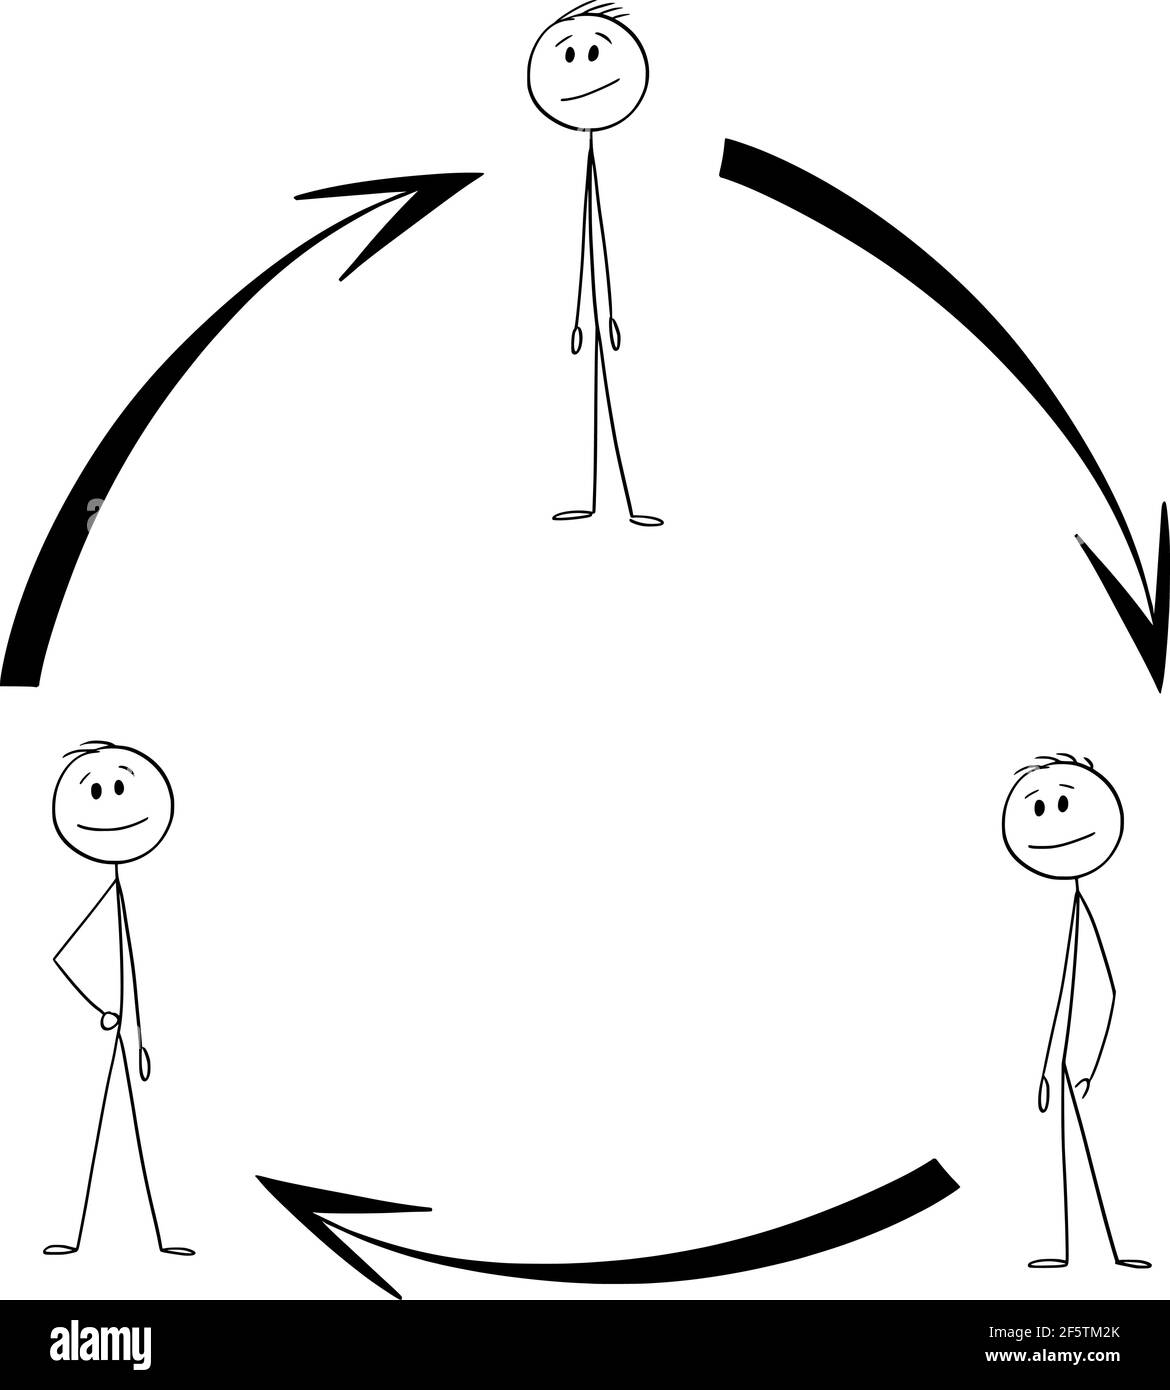 Scheme of Team or Teamwork Cooperation, Arrows in Circle, Vector Cartoon Stick Figure Illustration Stock Vector